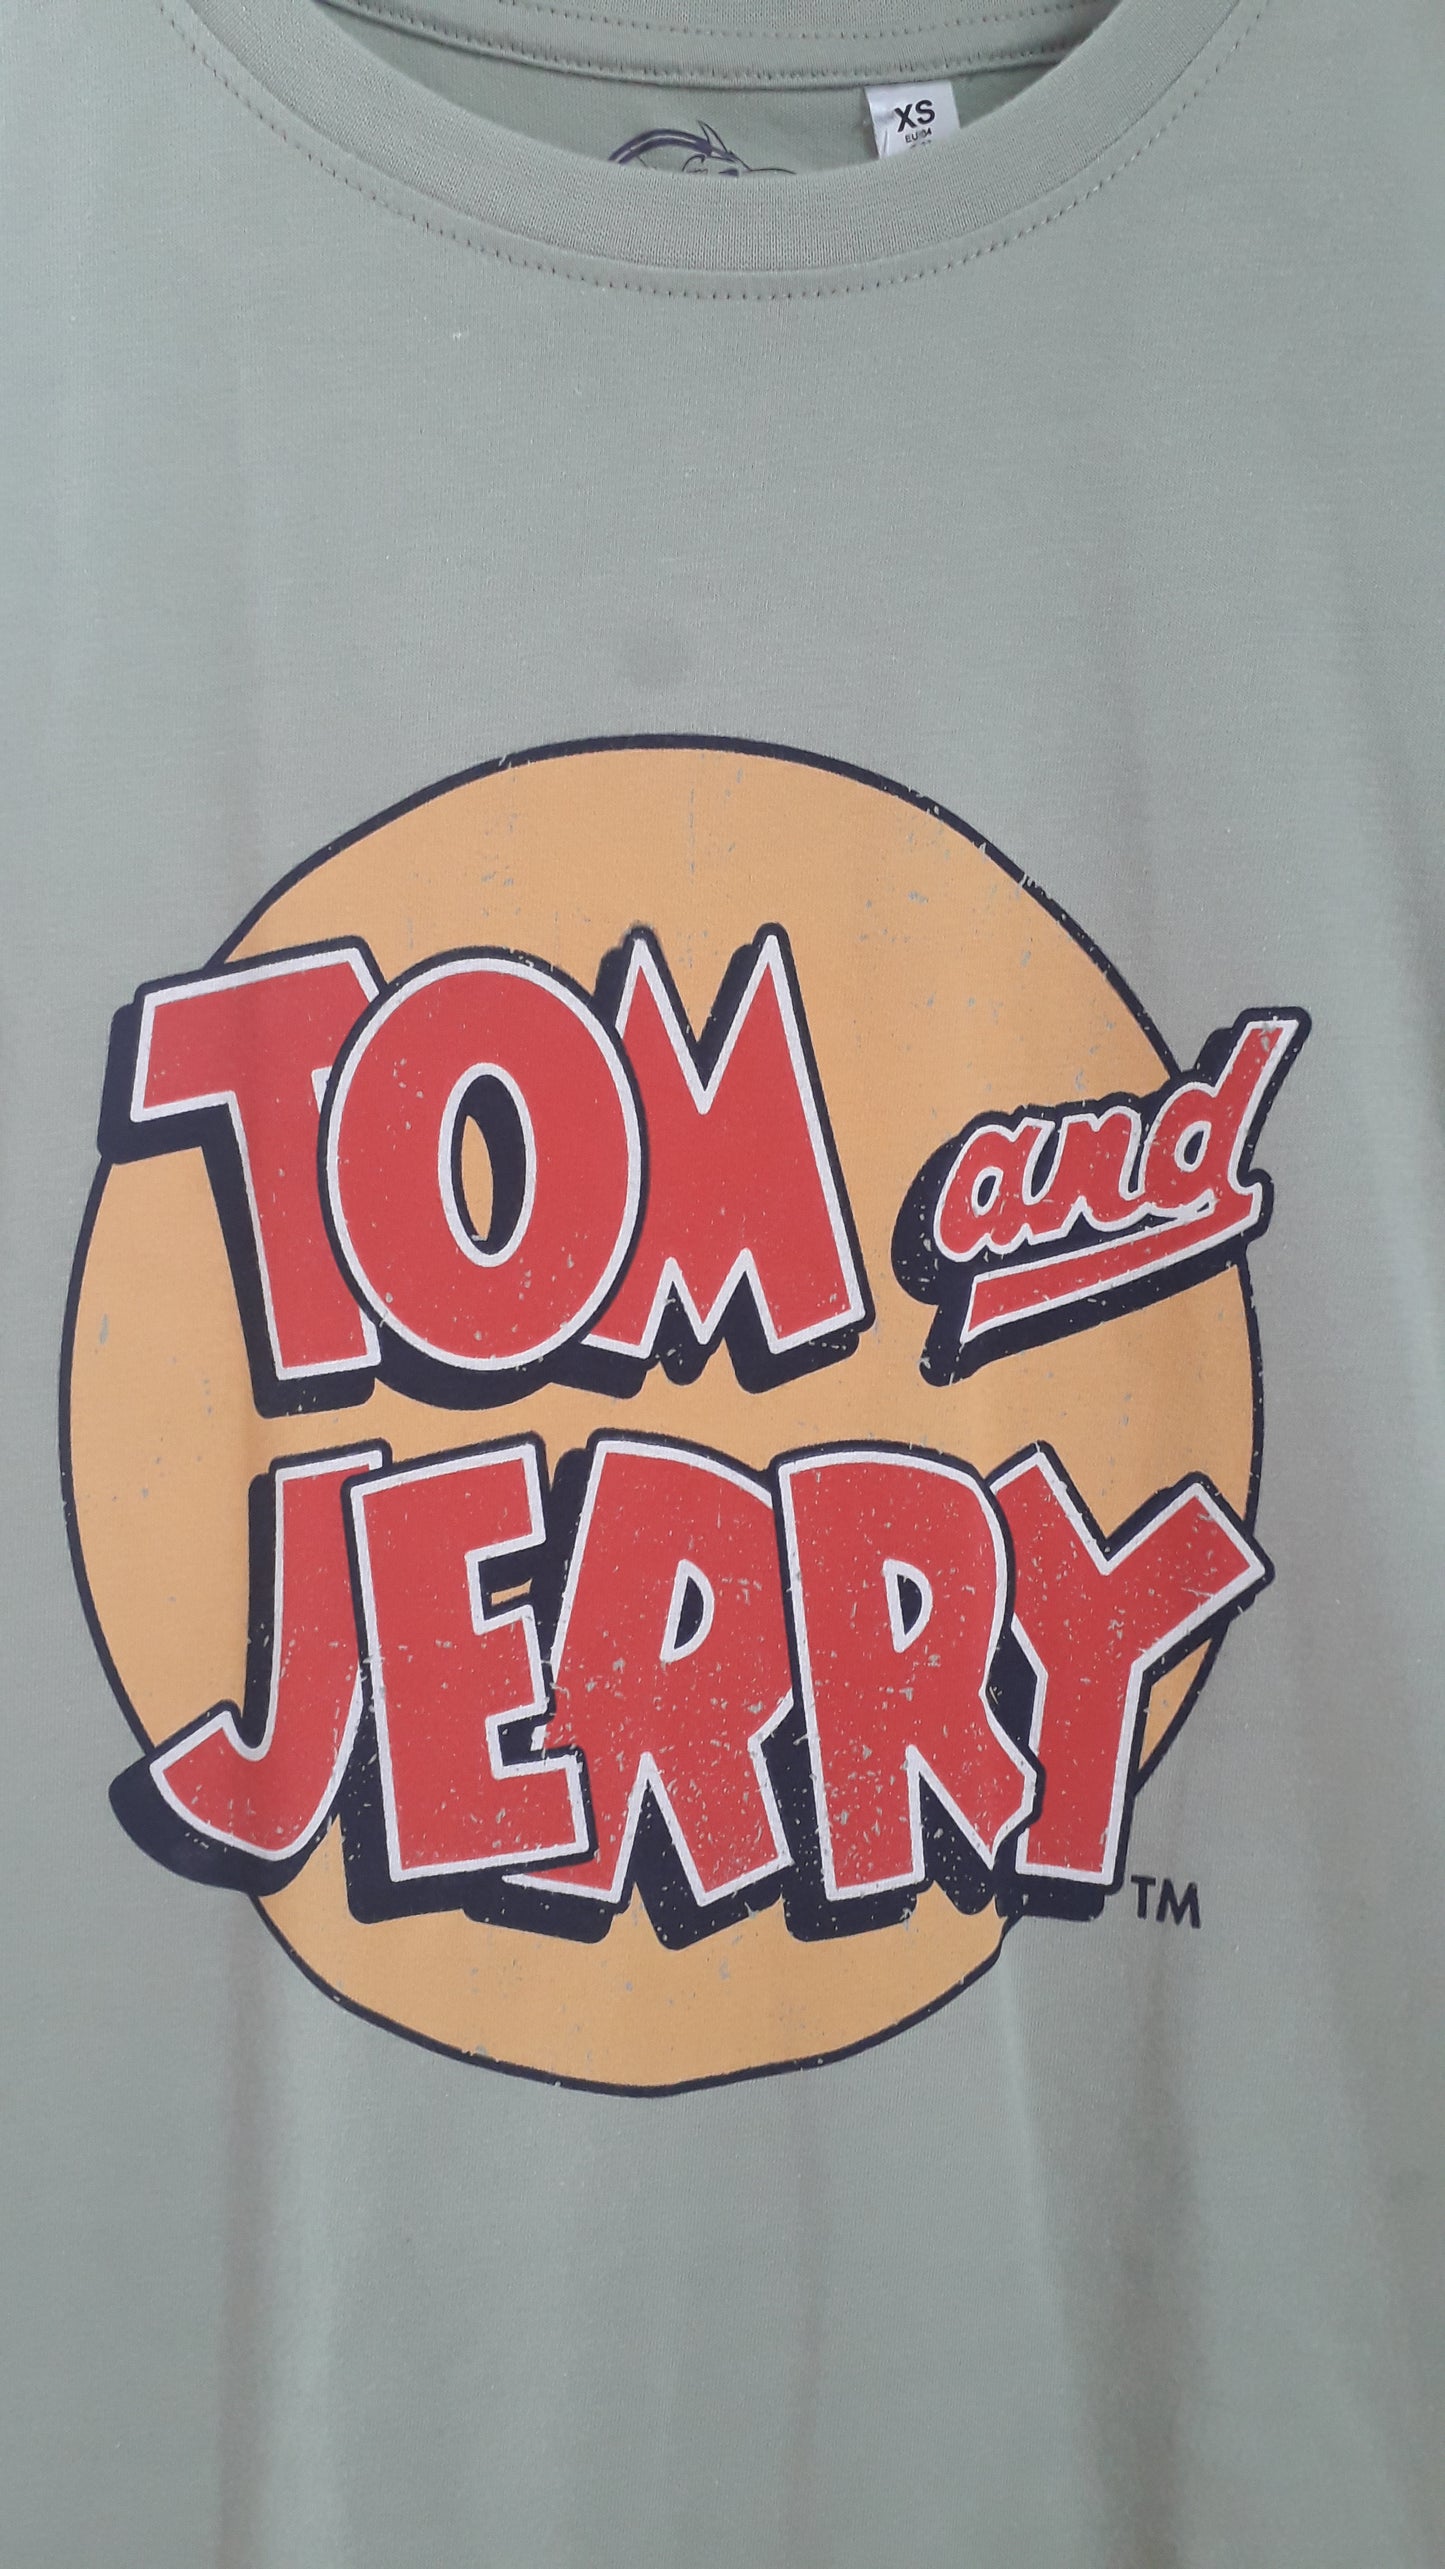 T shirt pistache - Tom & Jerry - 34